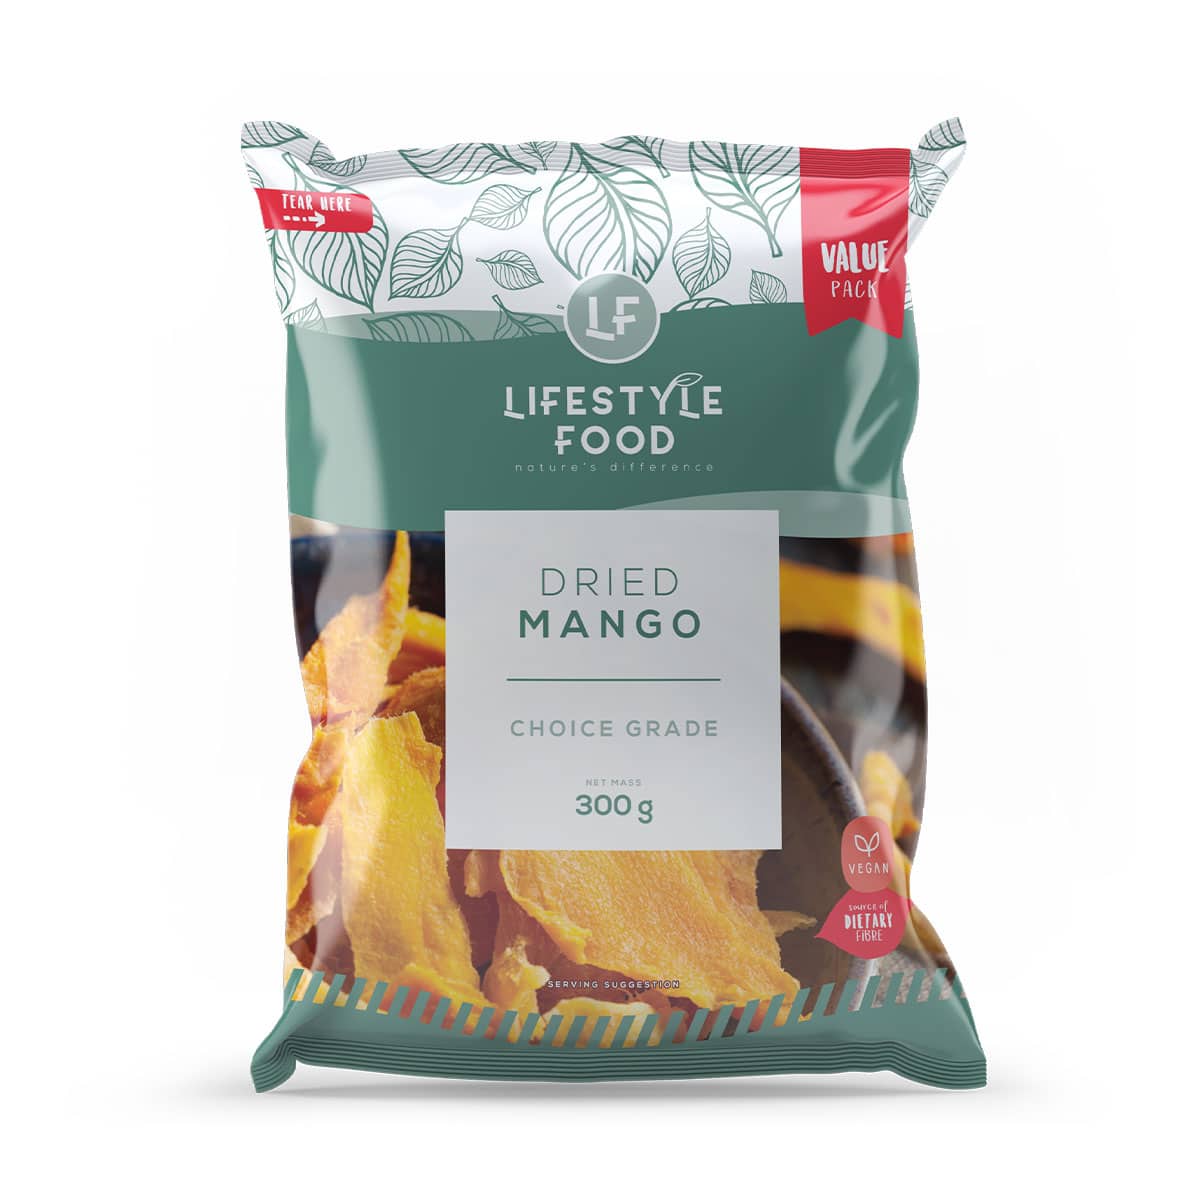 Lifestyle Food Dried Mango Choice Grade - 300g